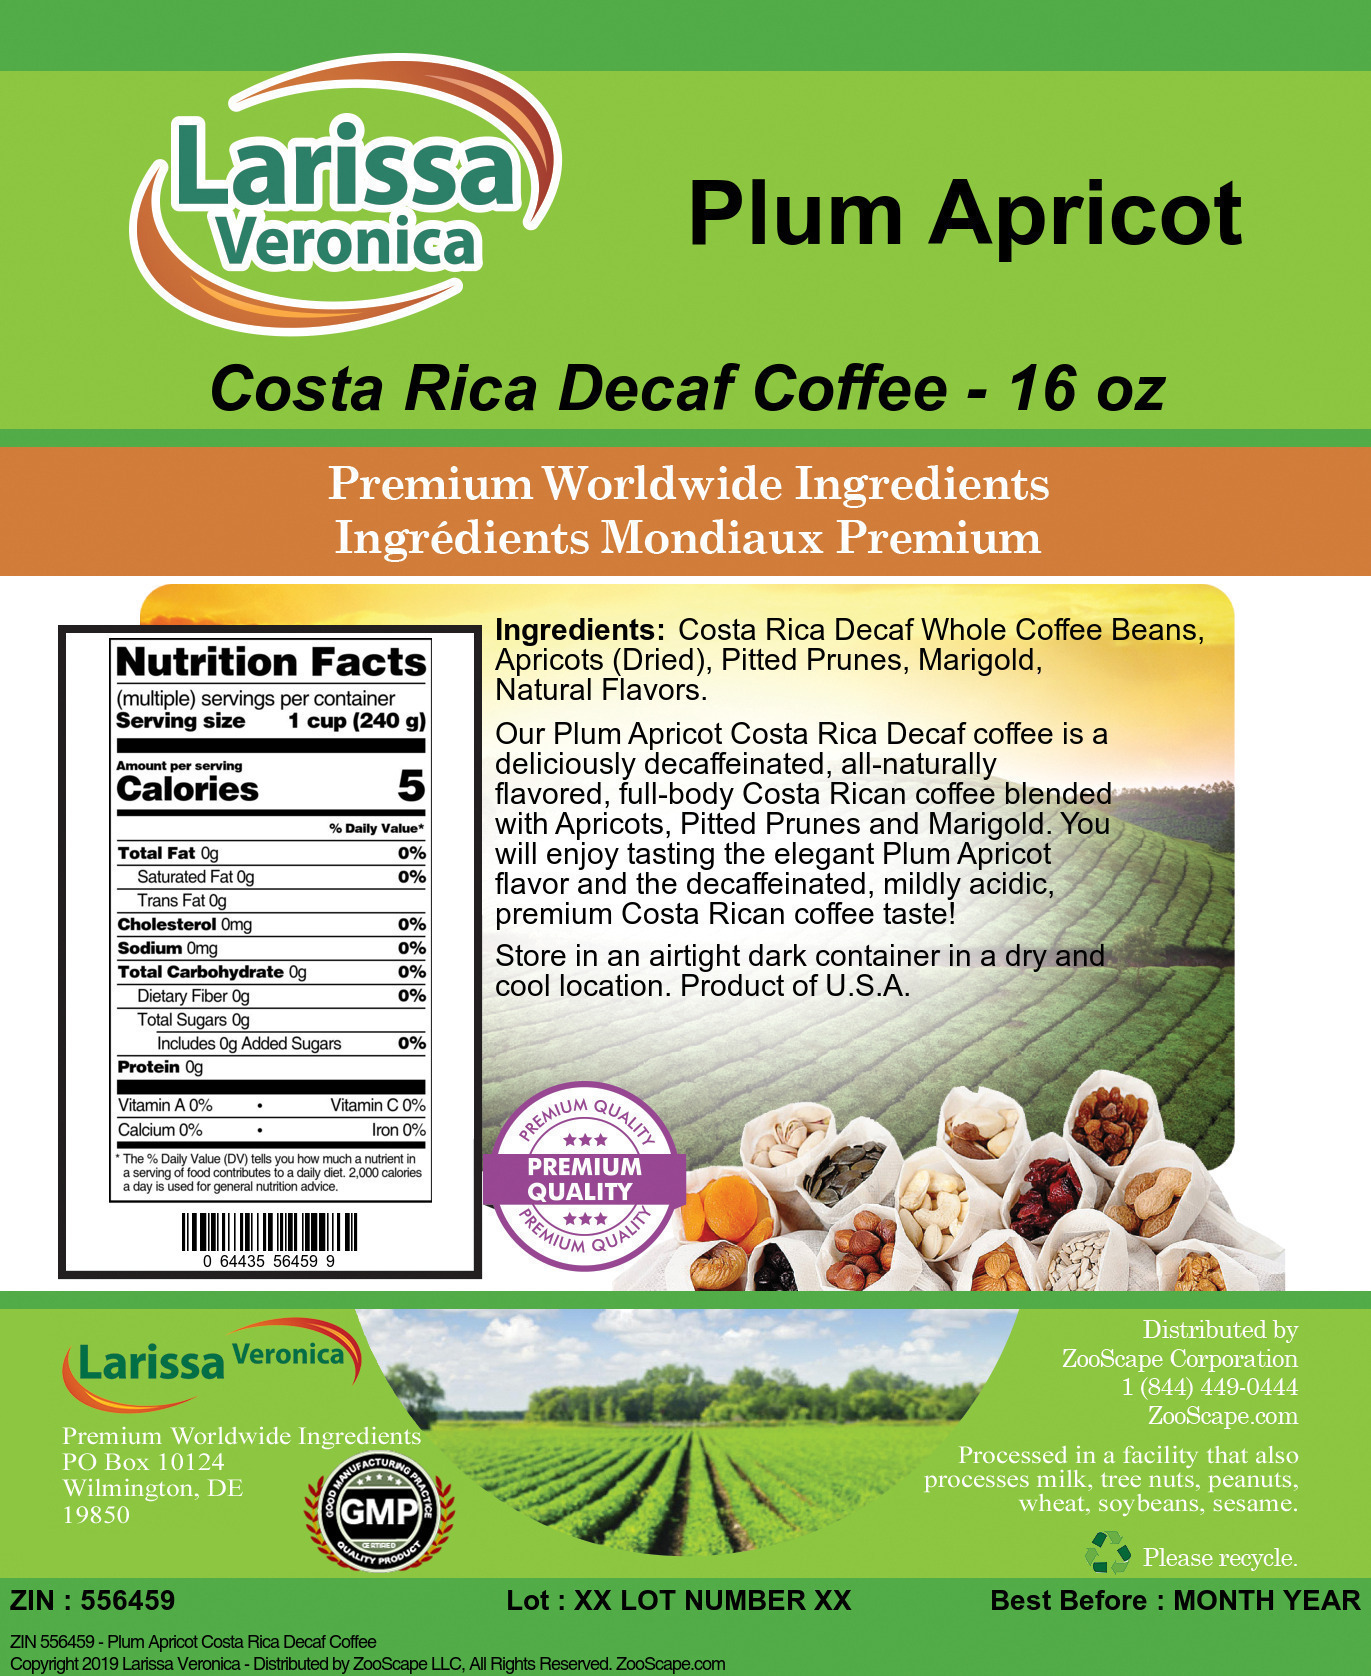 Plum Apricot Costa Rica Decaf Coffee - Label